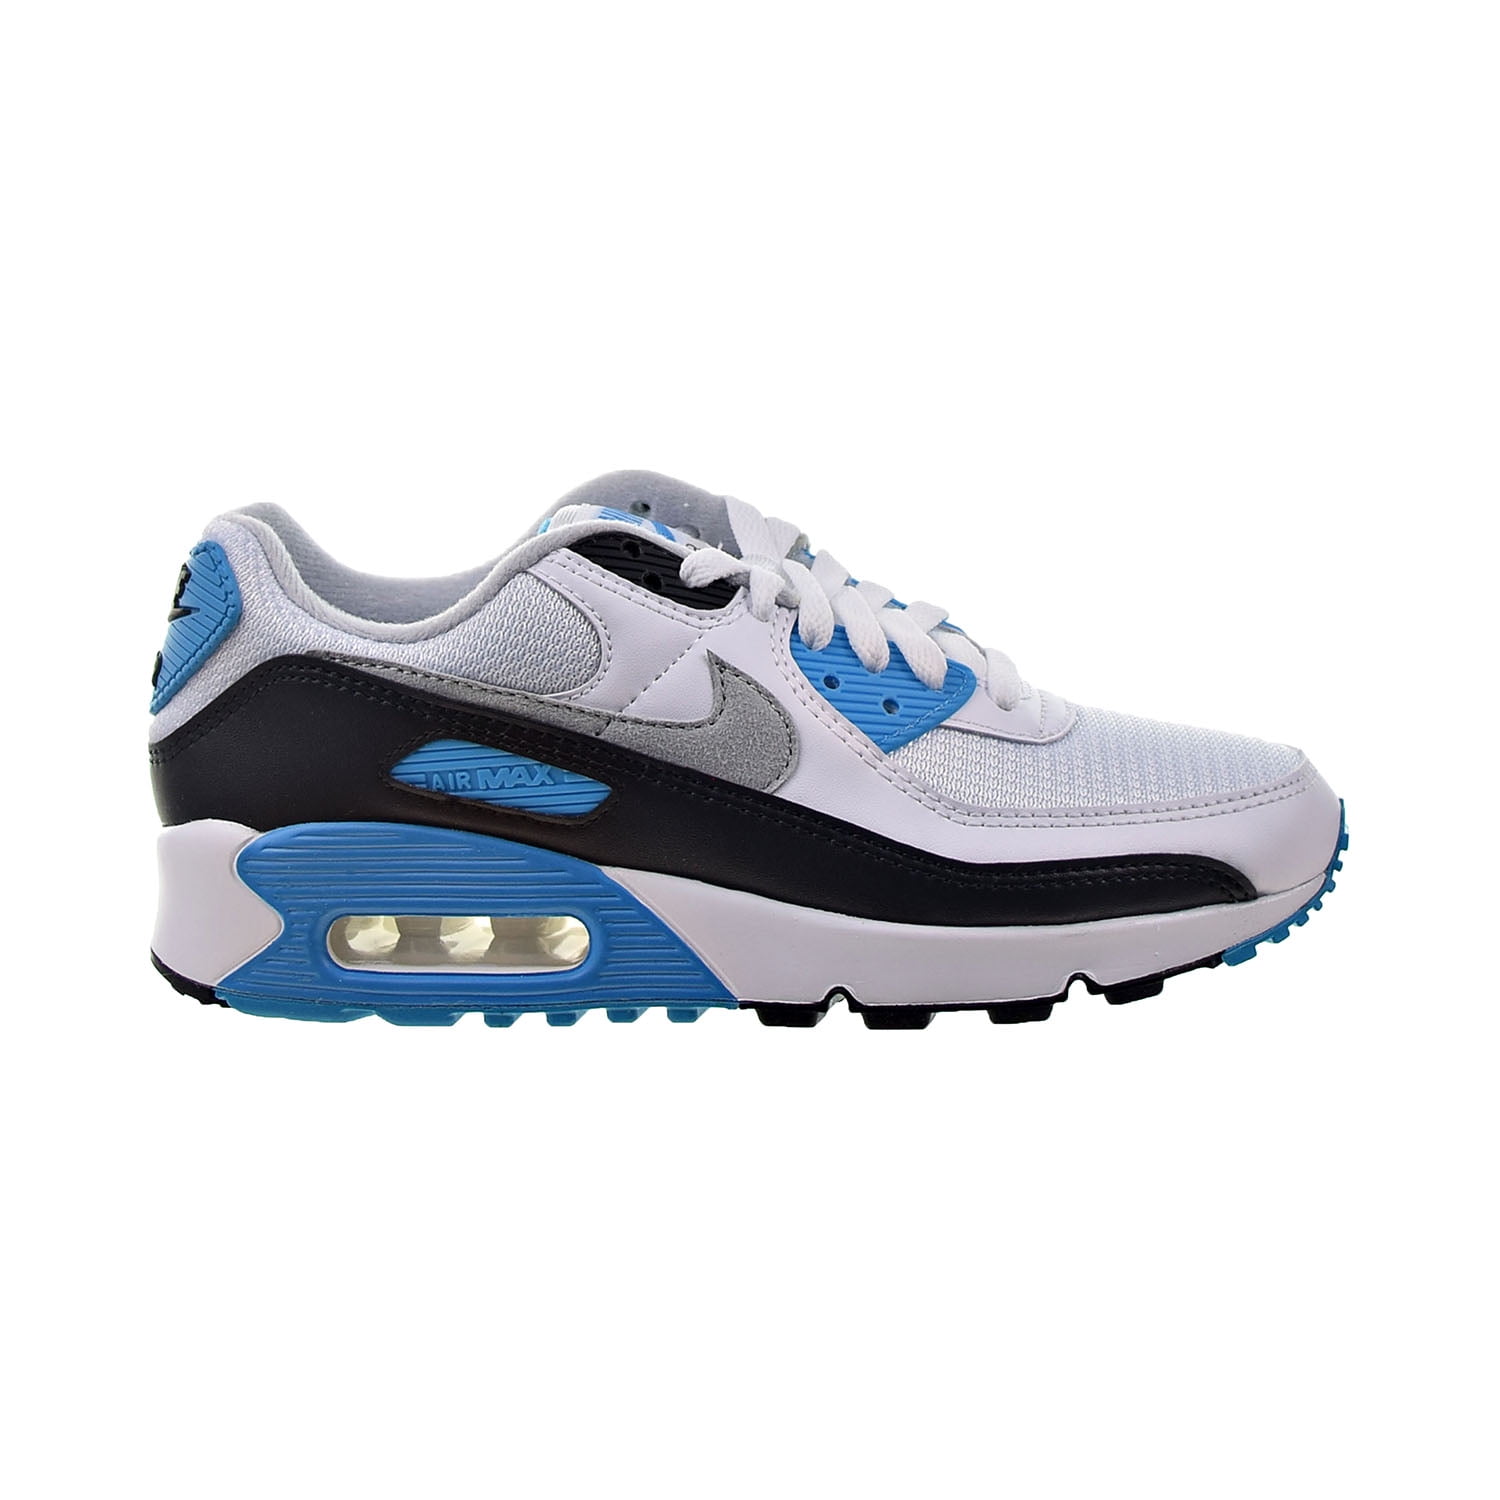 Nike Air Max 90 Mens Shoes White-Black-Grey-Laser Blue cj6779-100